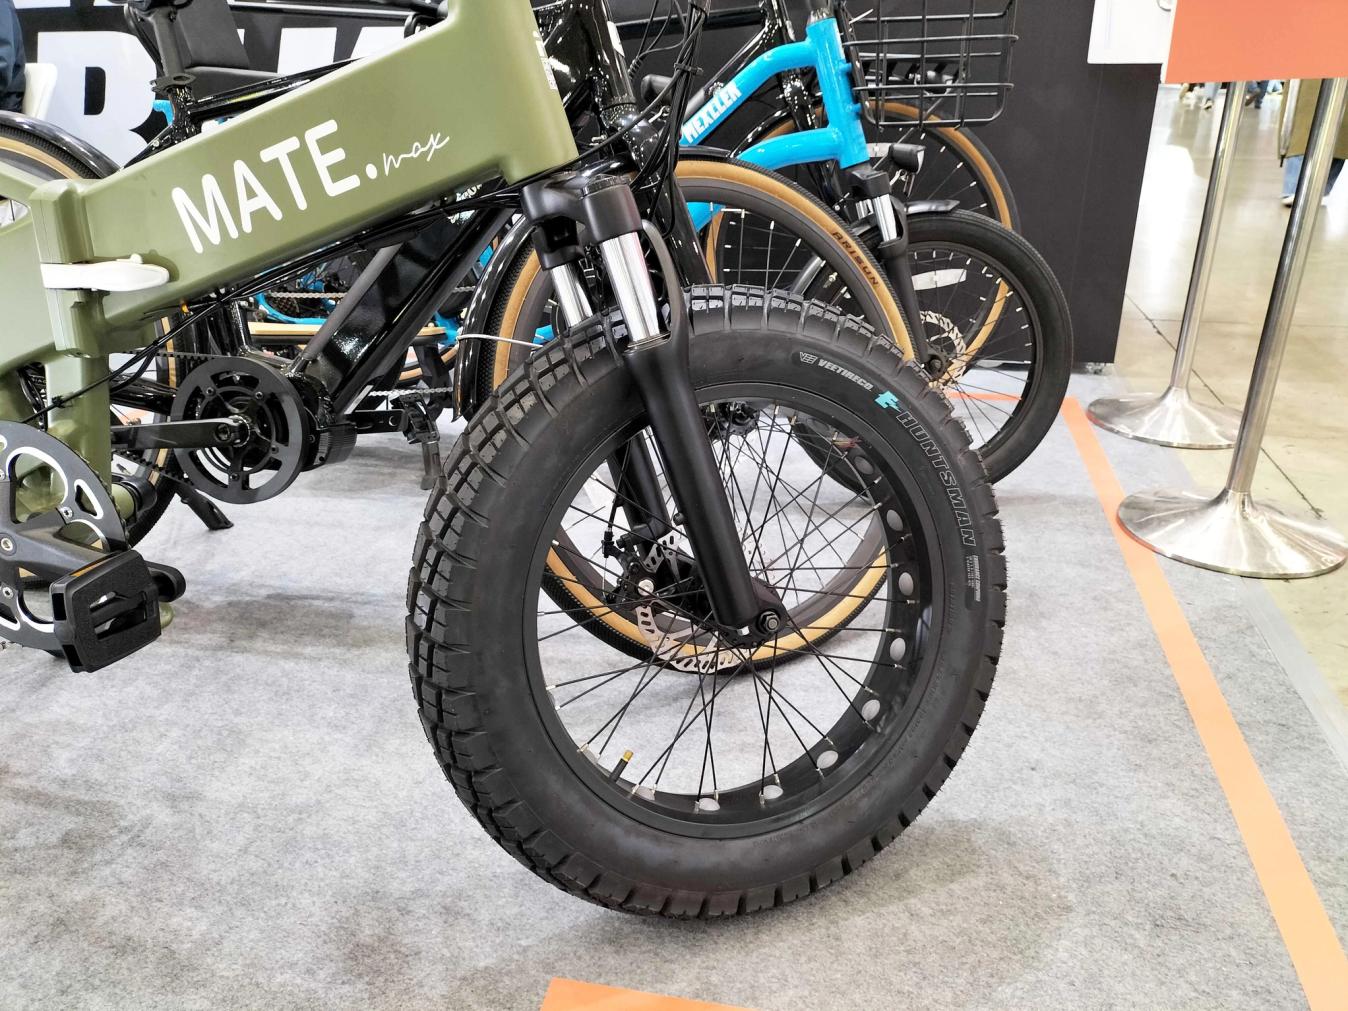 The unique bike has 4" wide tyres